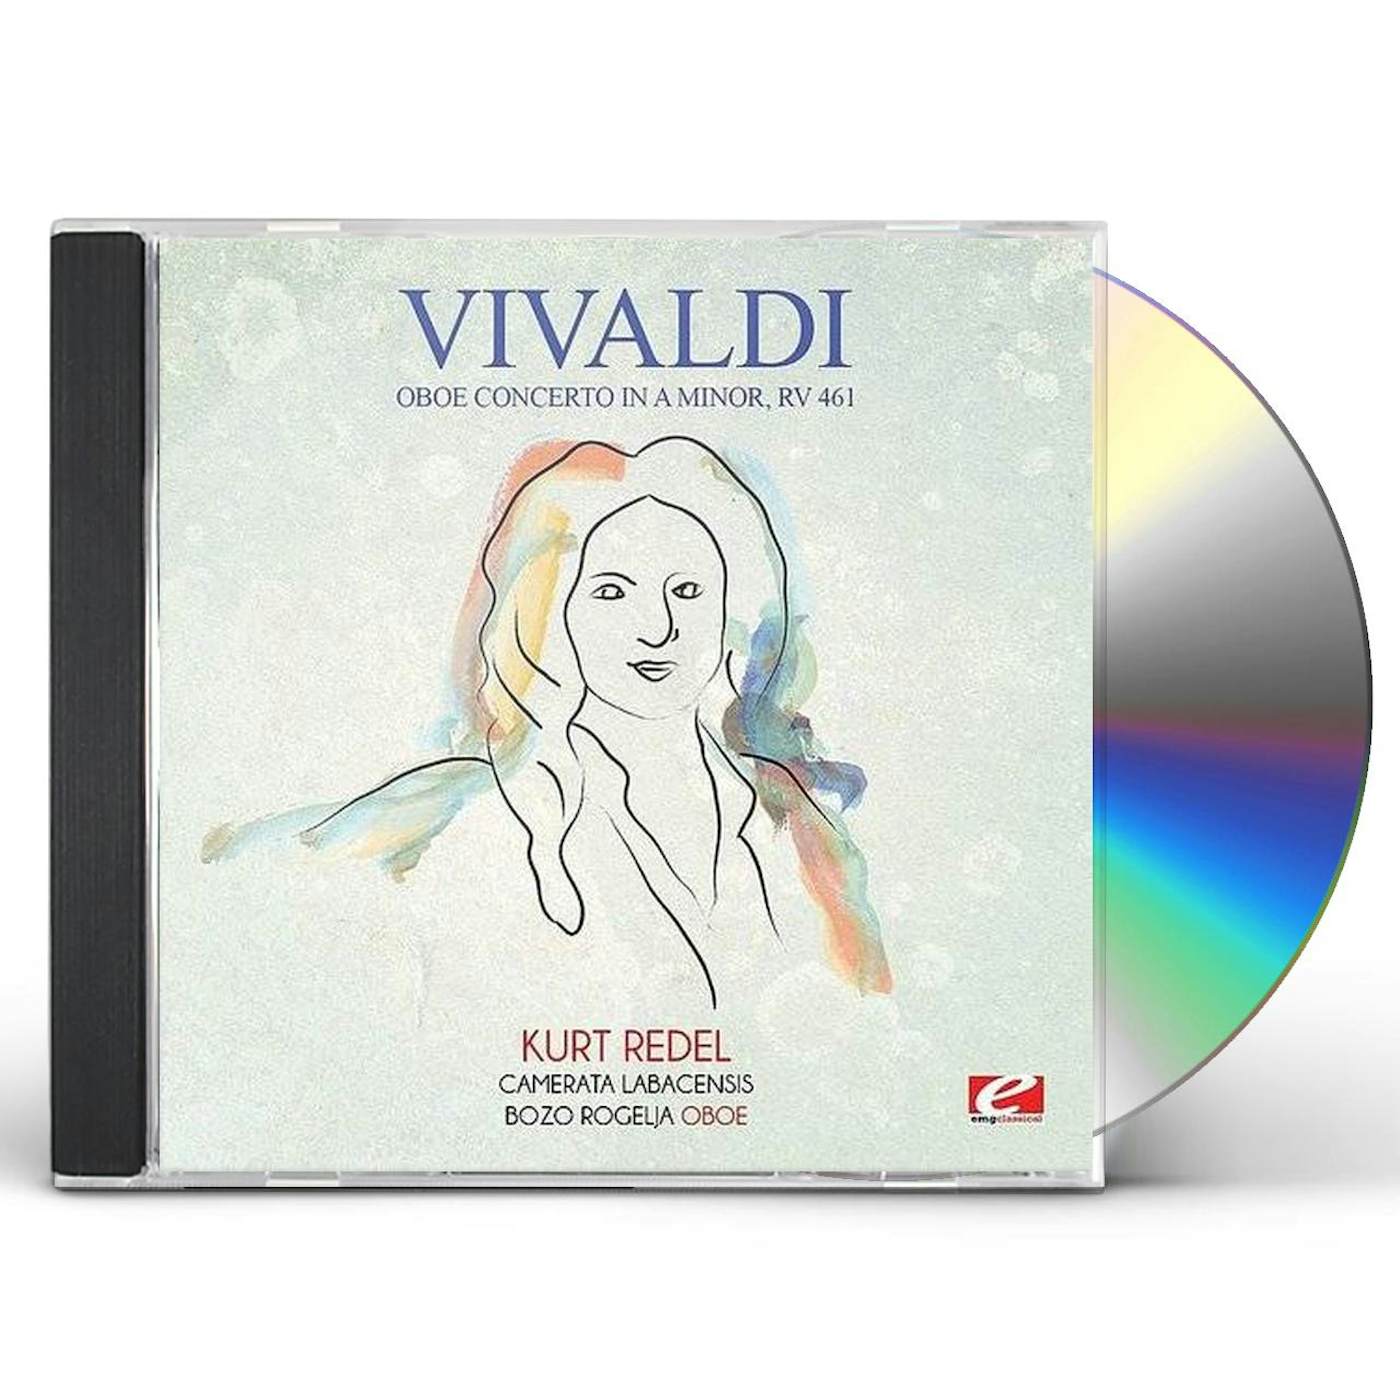 Antonio Vivaldi OBOE CONCERTO IN A MINOR RV 461 CD